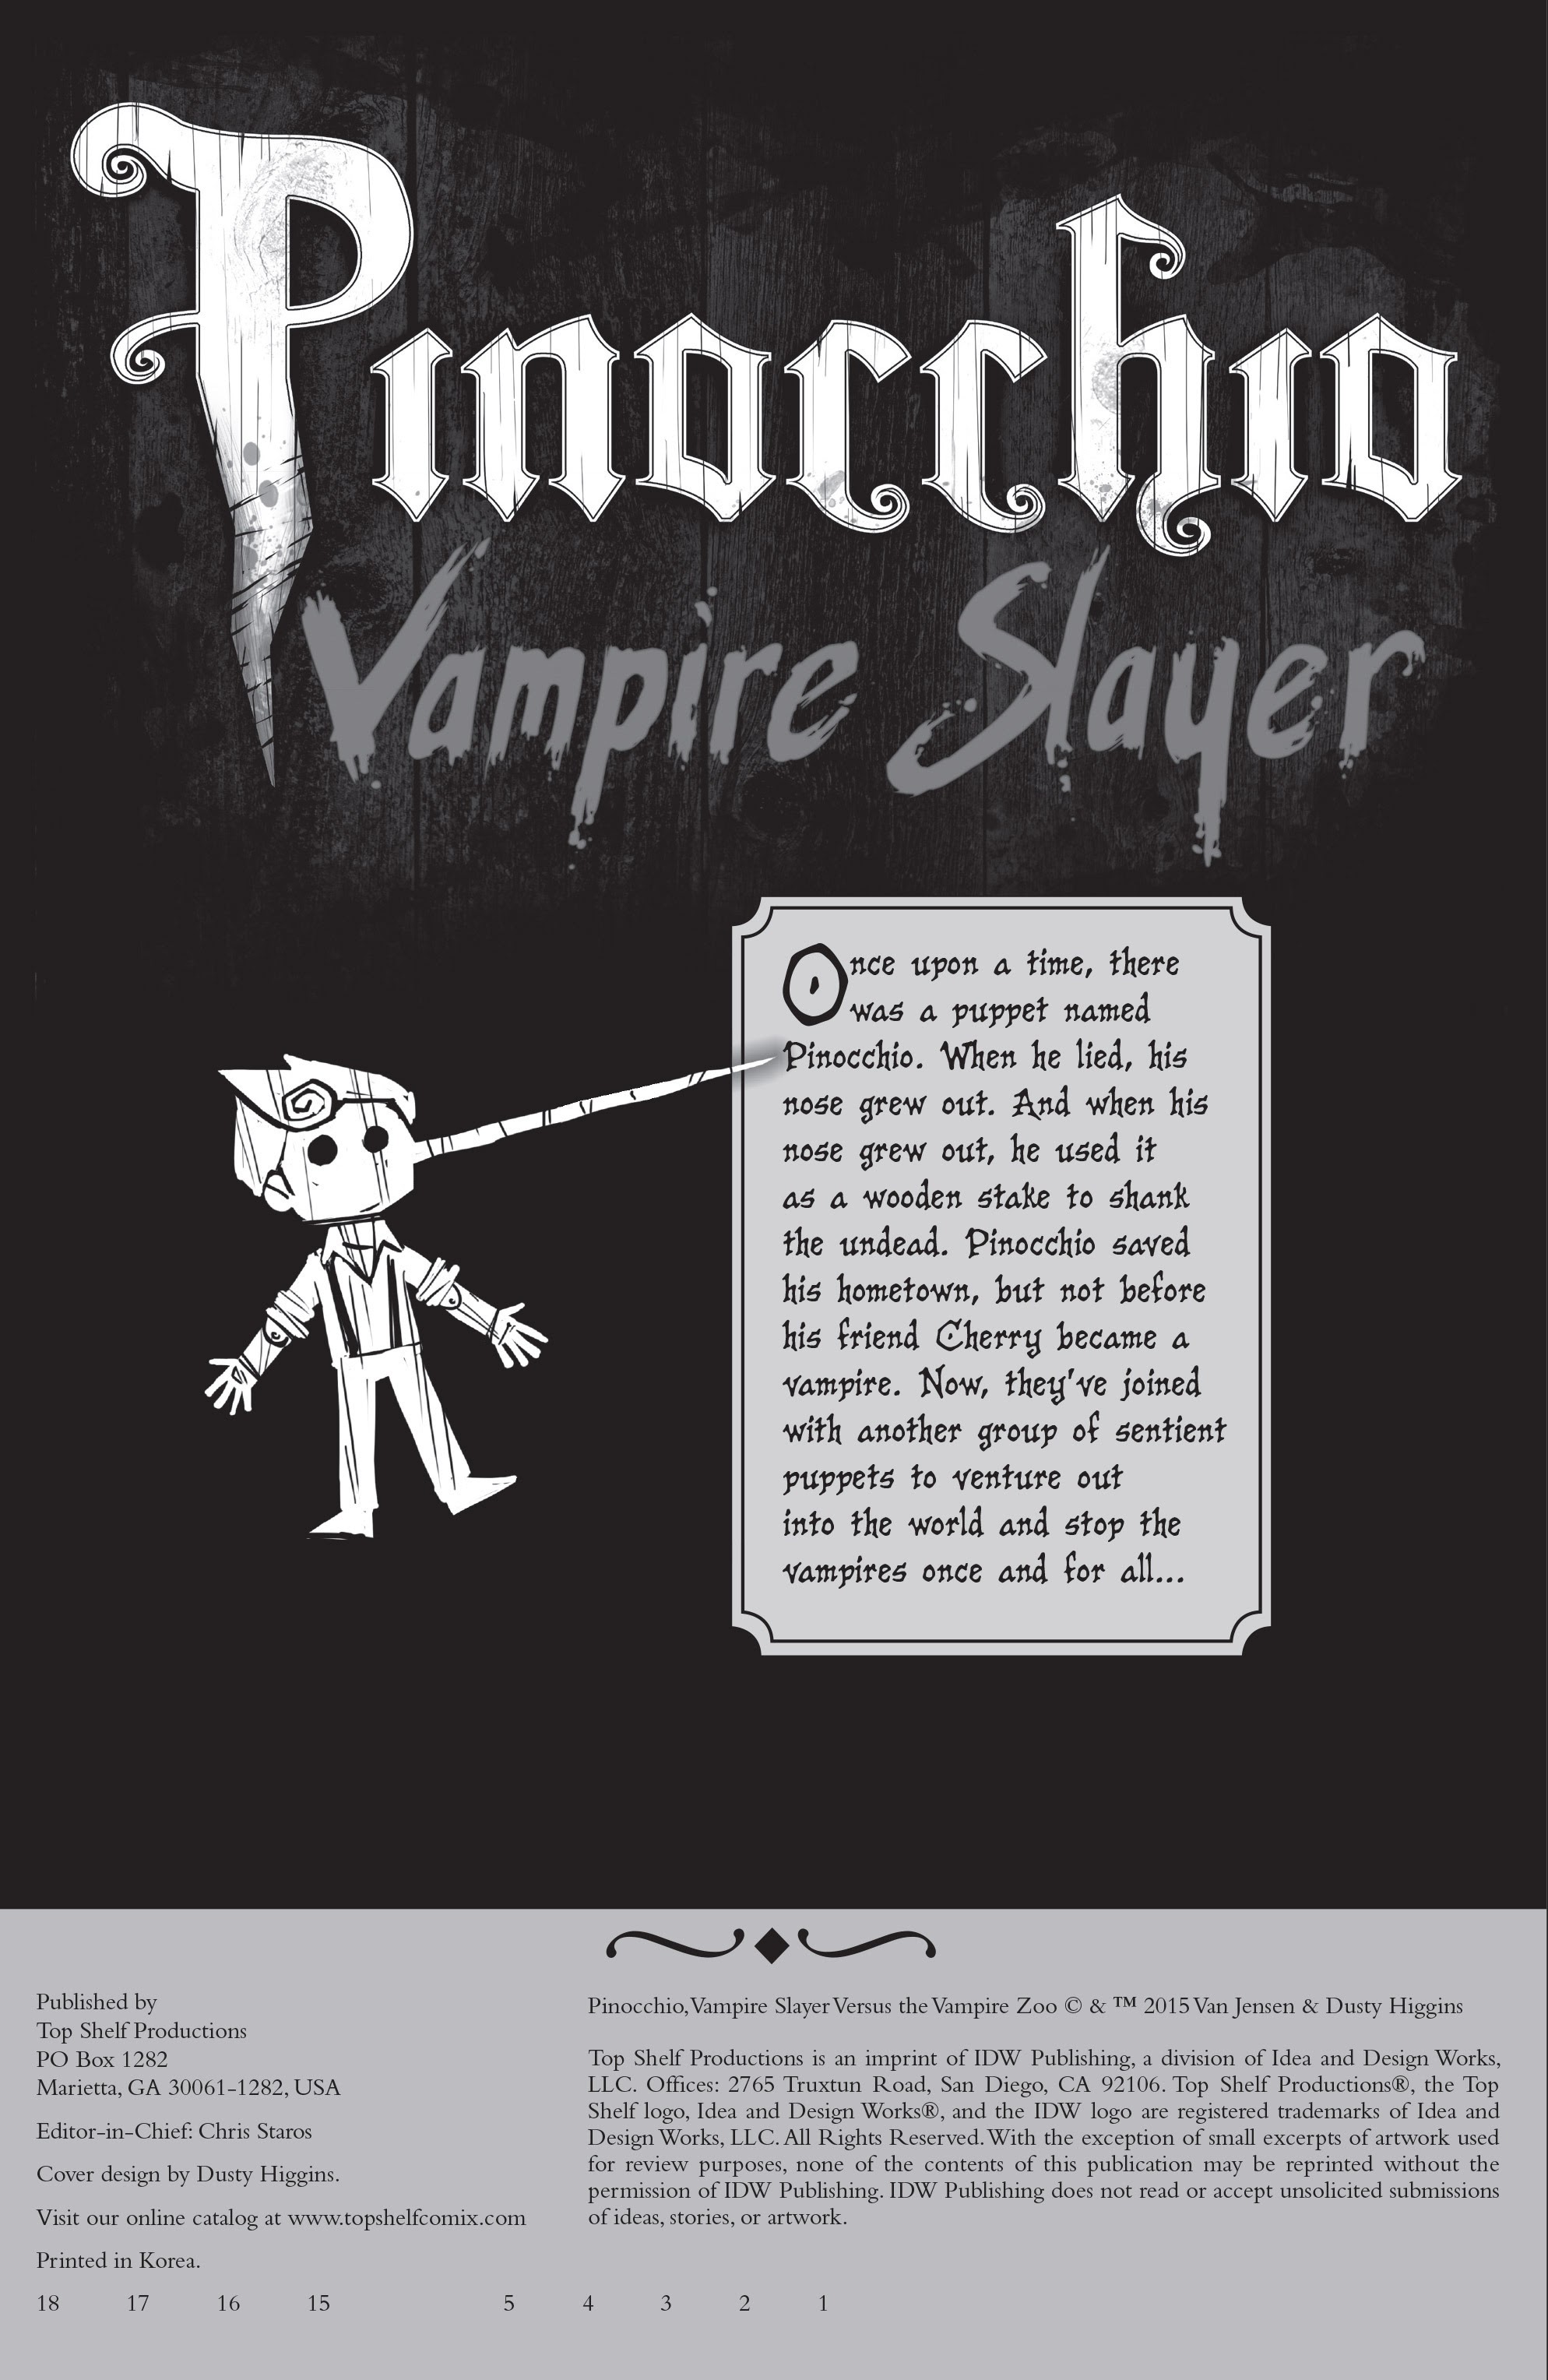 Read online Pinocchio, Vampire Slayer Versus the Vampire Zoo comic -  Issue # Full - 2